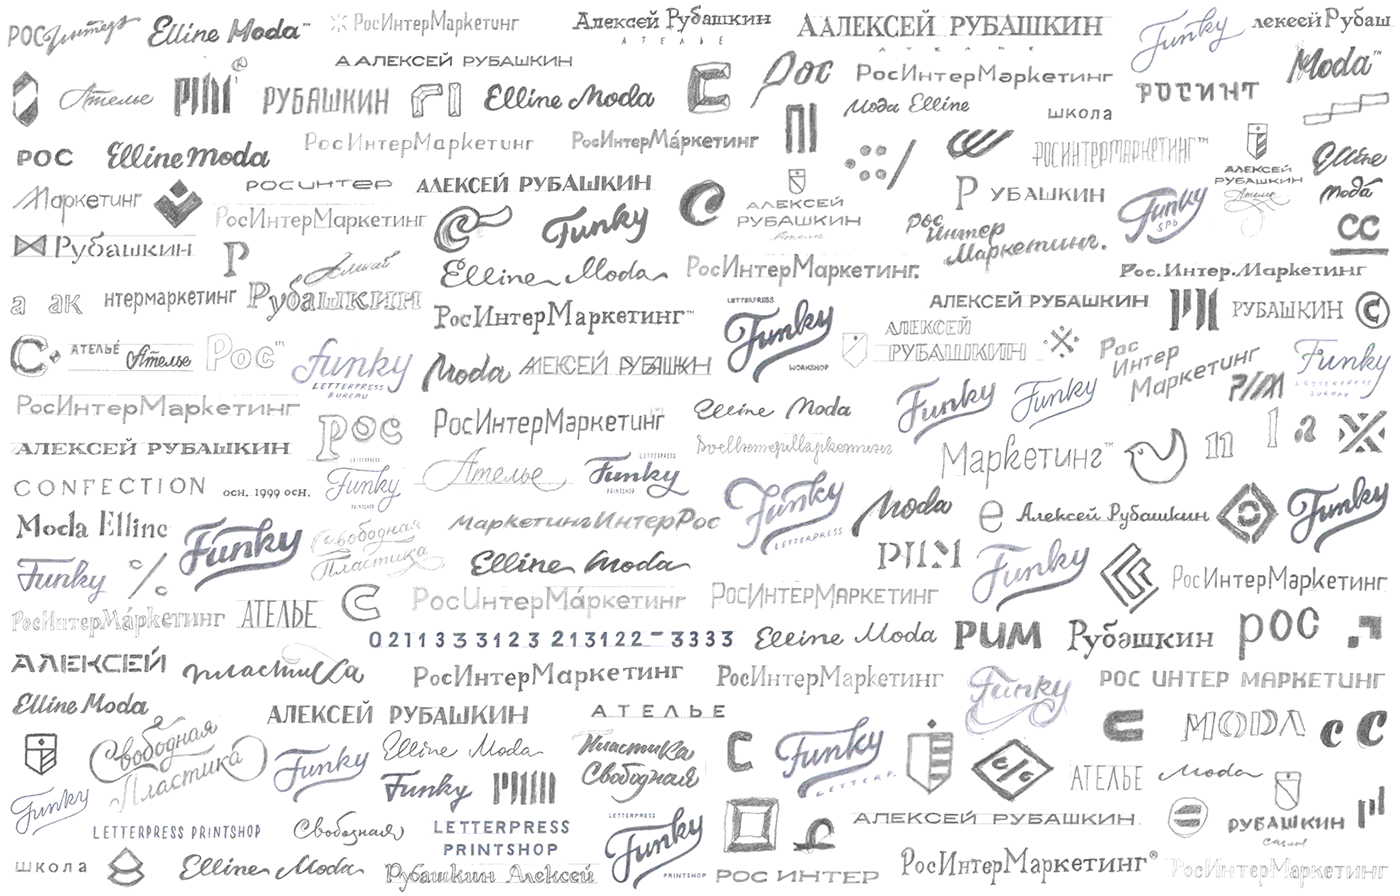 value studio Murmansk brand brands identity identities logo logos Logotype logotypes mark marks monogram lettering monochrome